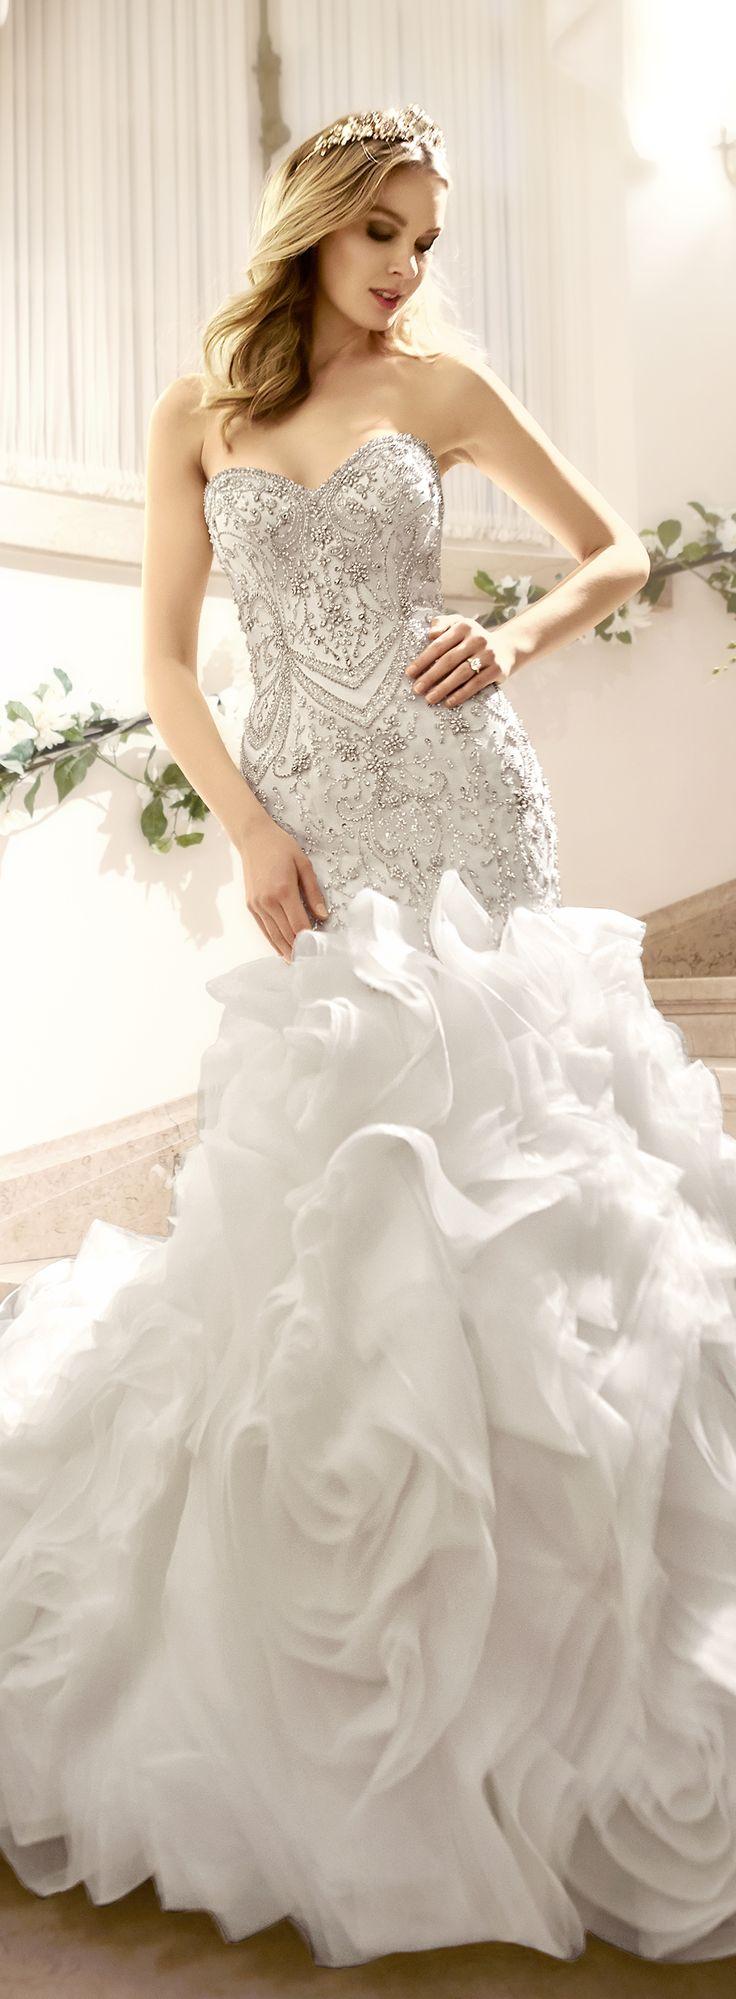 زفاف - Wedding Dress With Beaded Bodice And Textured Skirt 